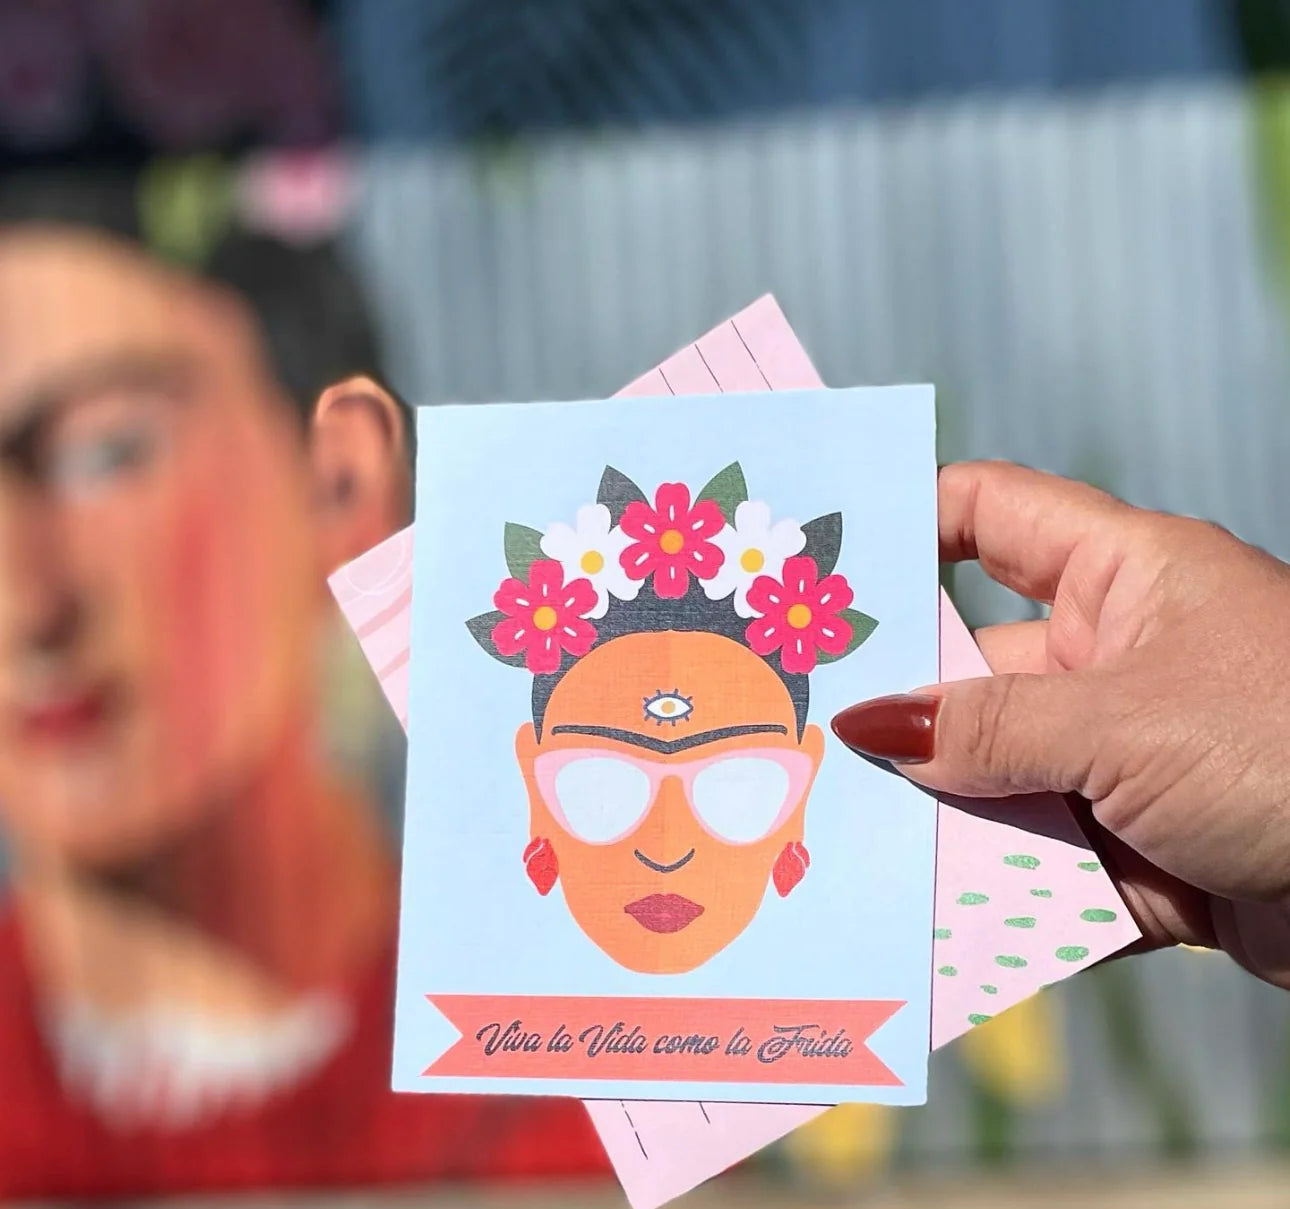 Viva La Vida Frida Kahlo Inspired  Greeting Card